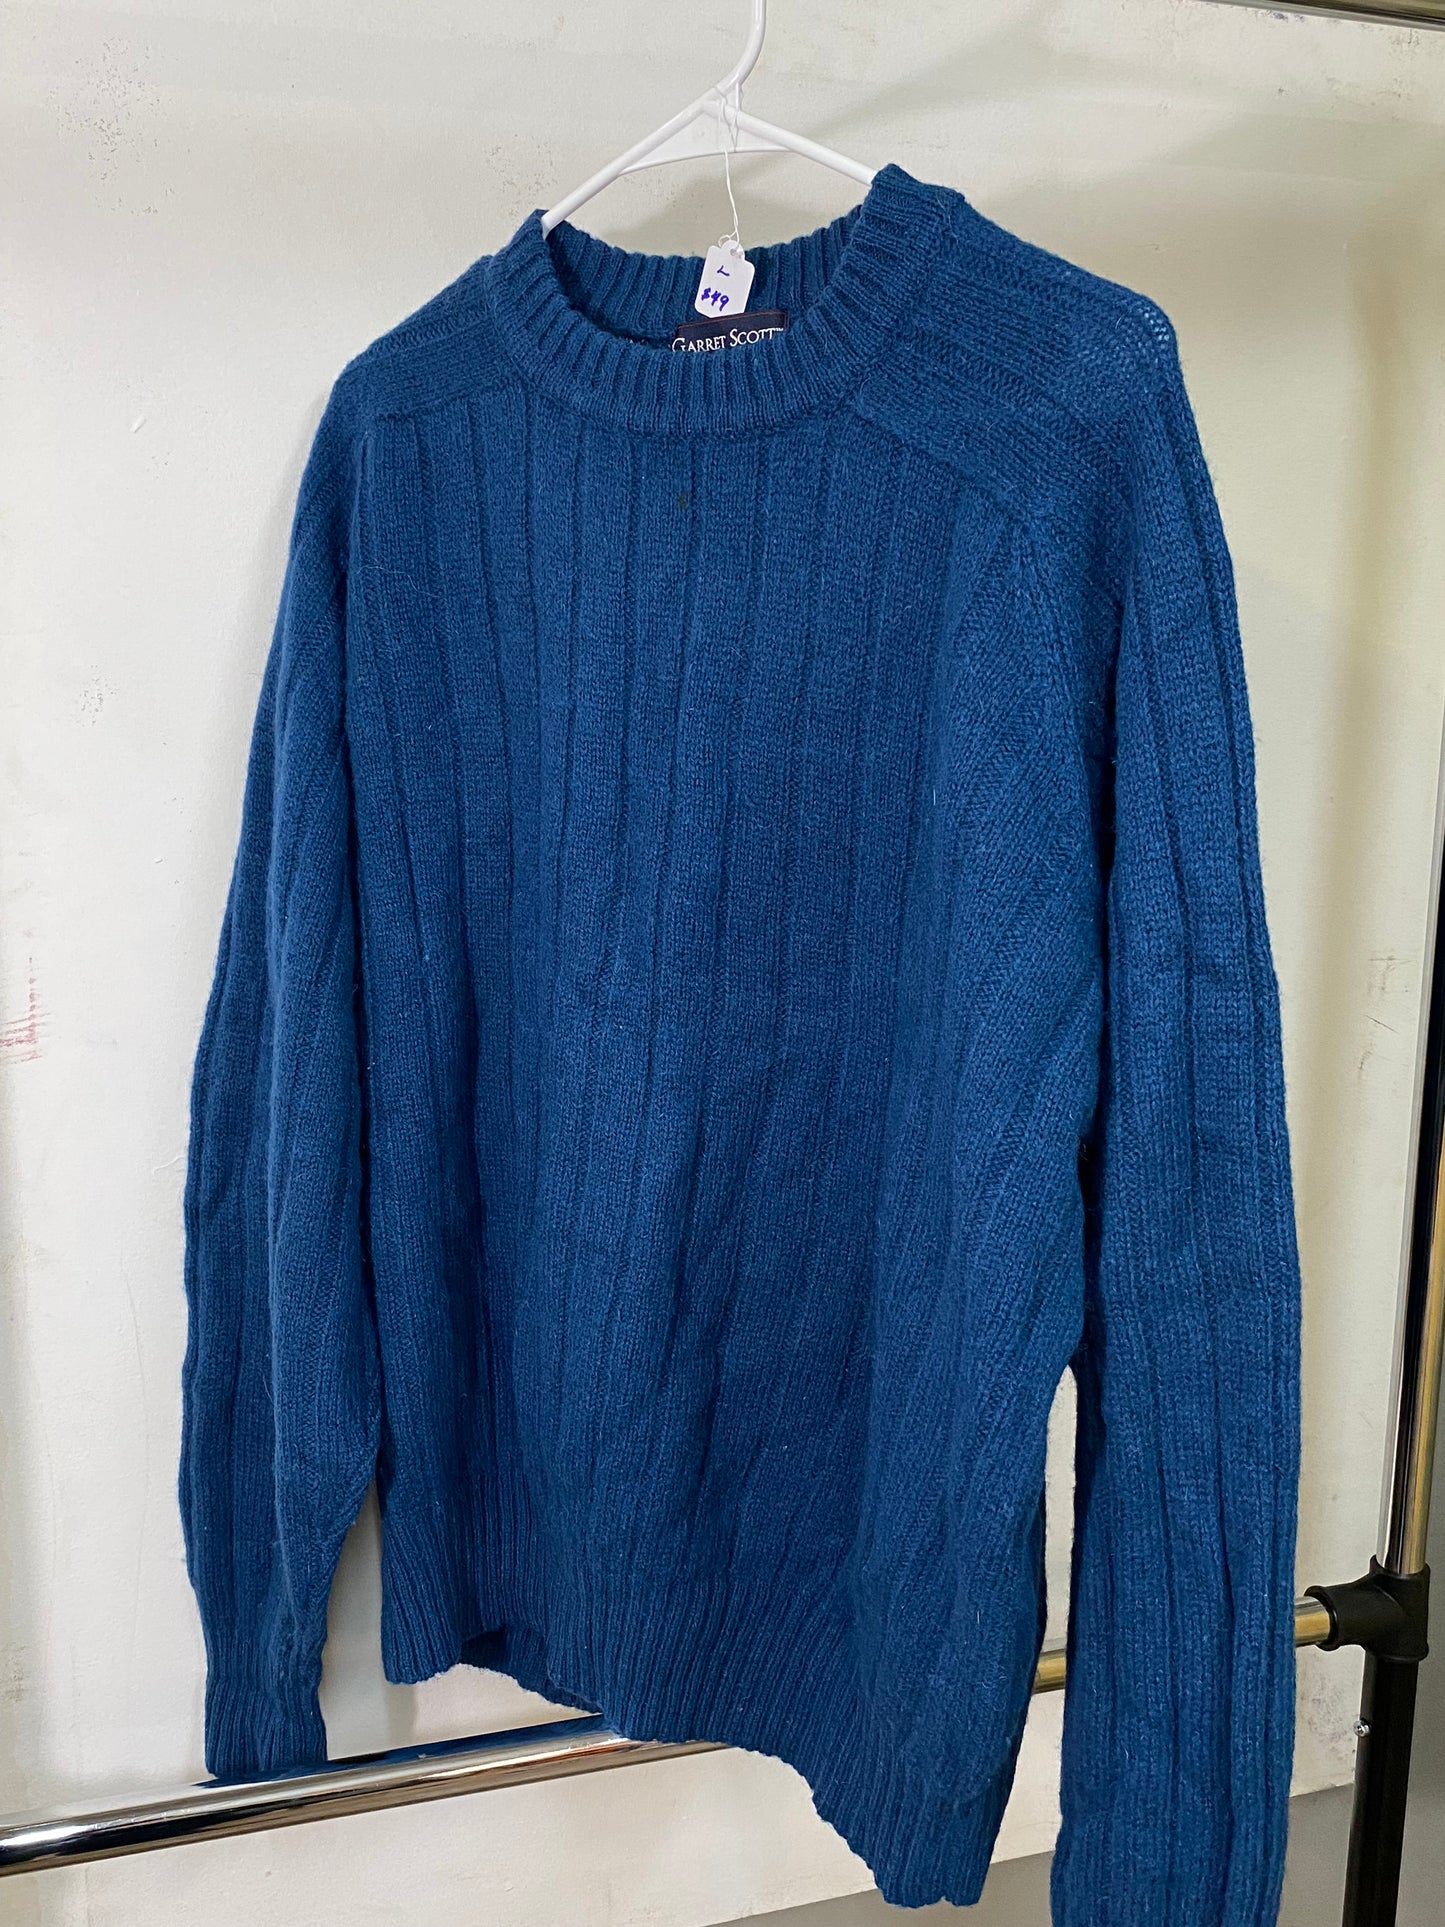 Garret Scott Blue Wool Knit Sweater